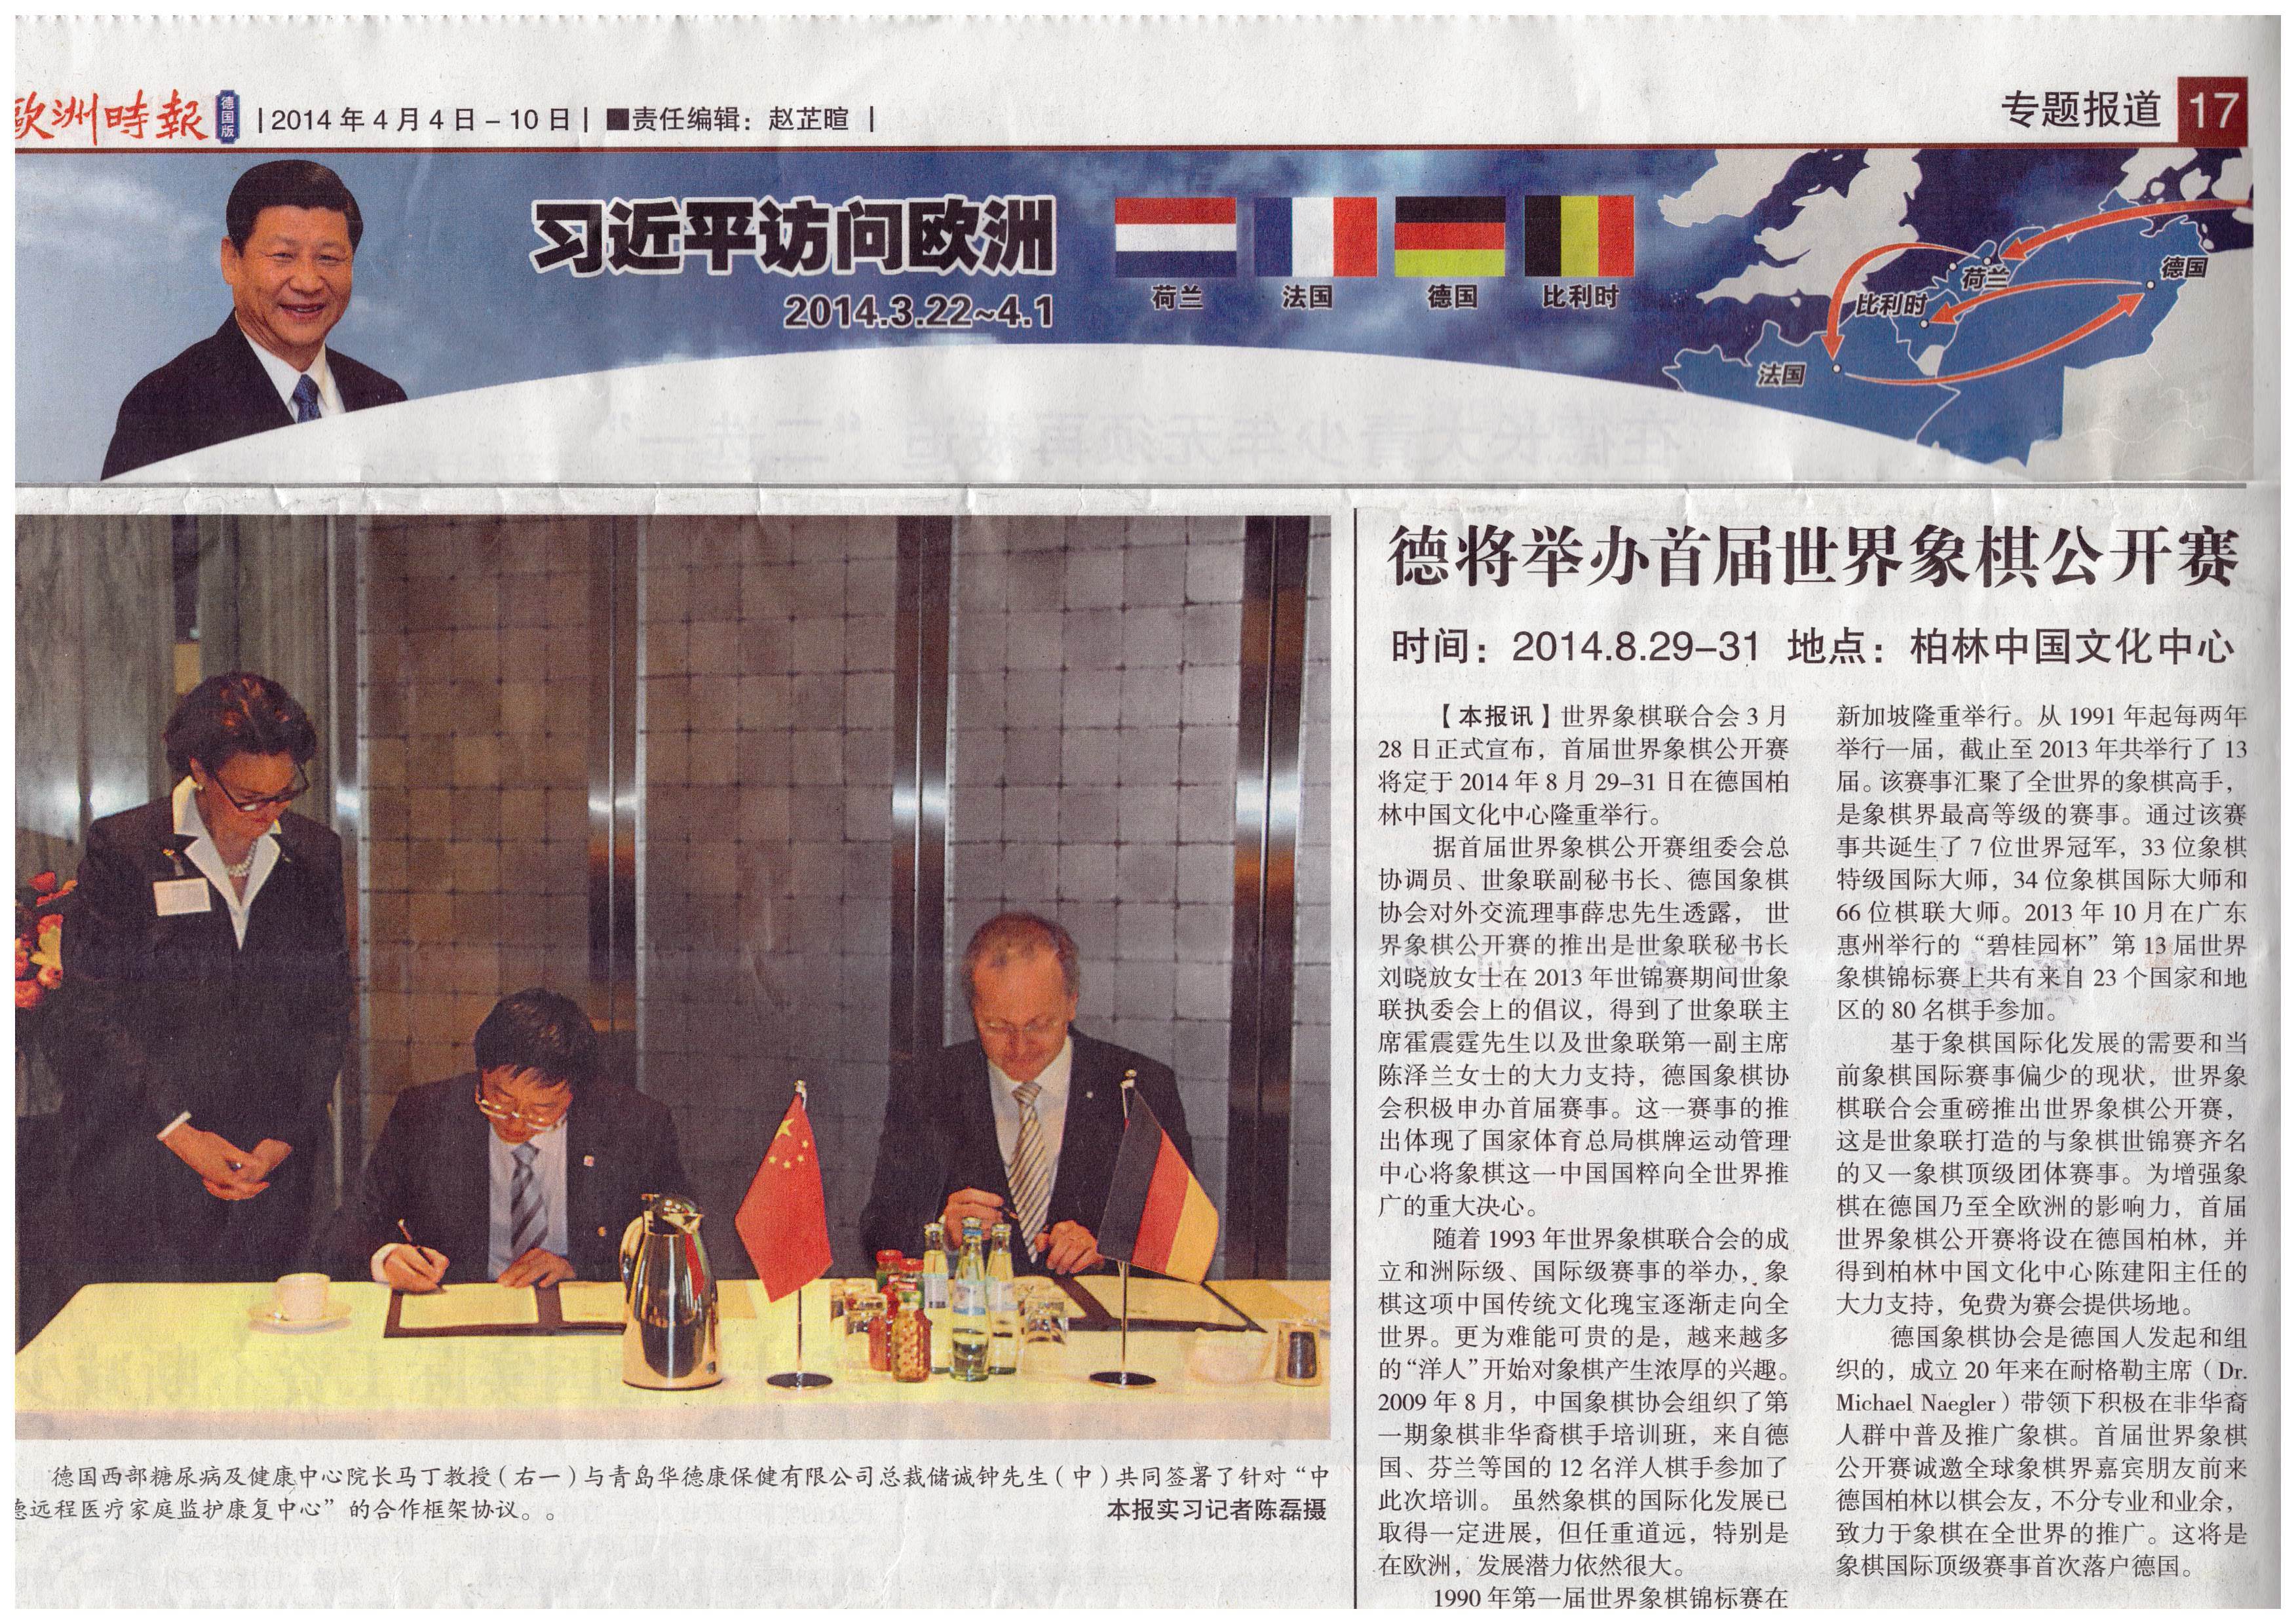 2014 World Xiangqi Open Chinese newspaper clipping